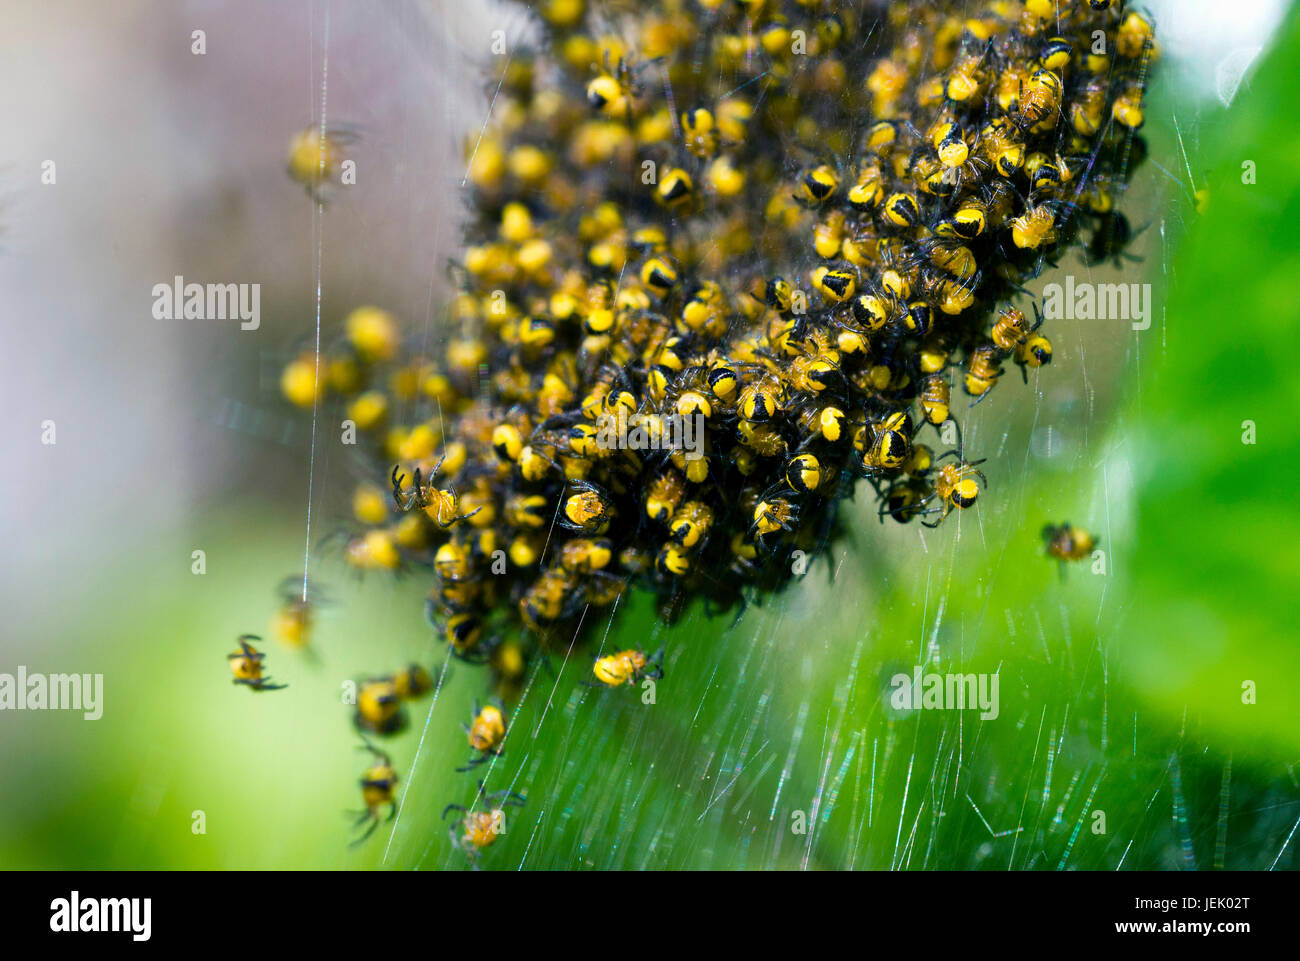 European garden spider (Araneus diadematus) spiderlings Stock Photo